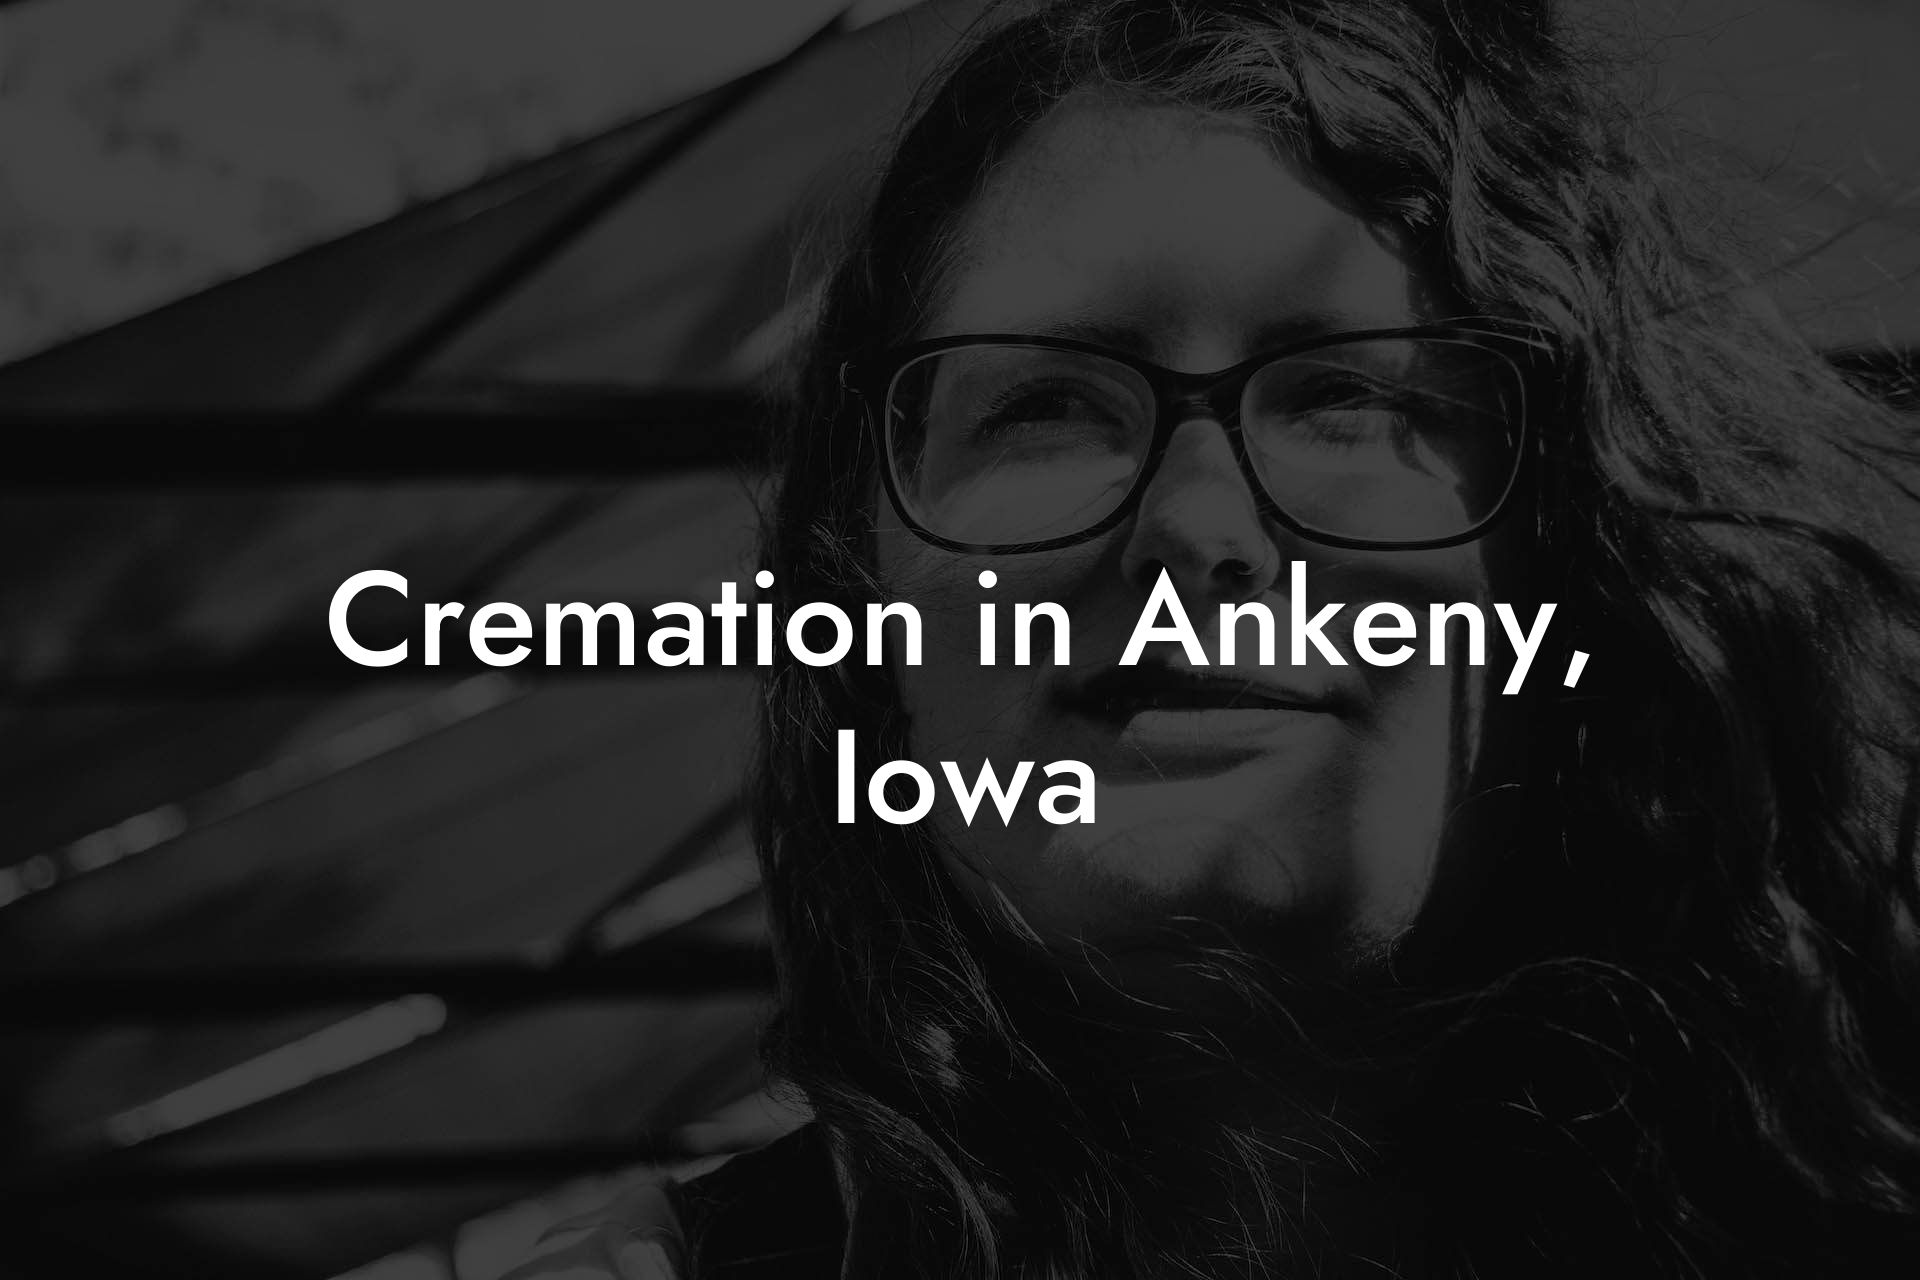 Cremation in Ankeny, Iowa